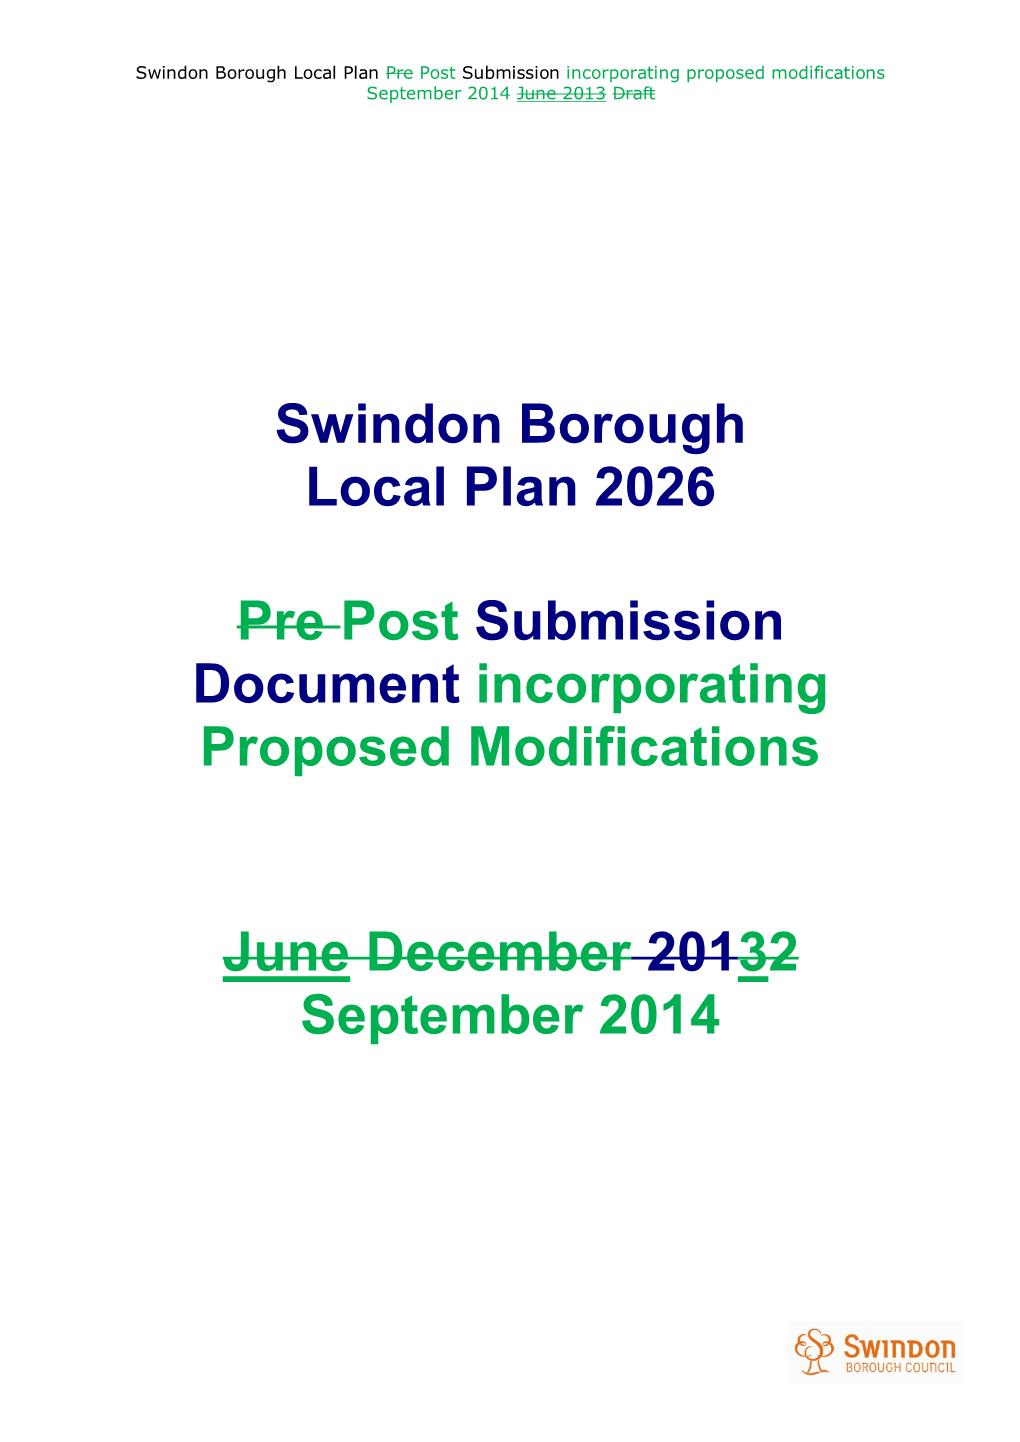 Swindon Borough Local Plan 2026 Pre Post Submission Document